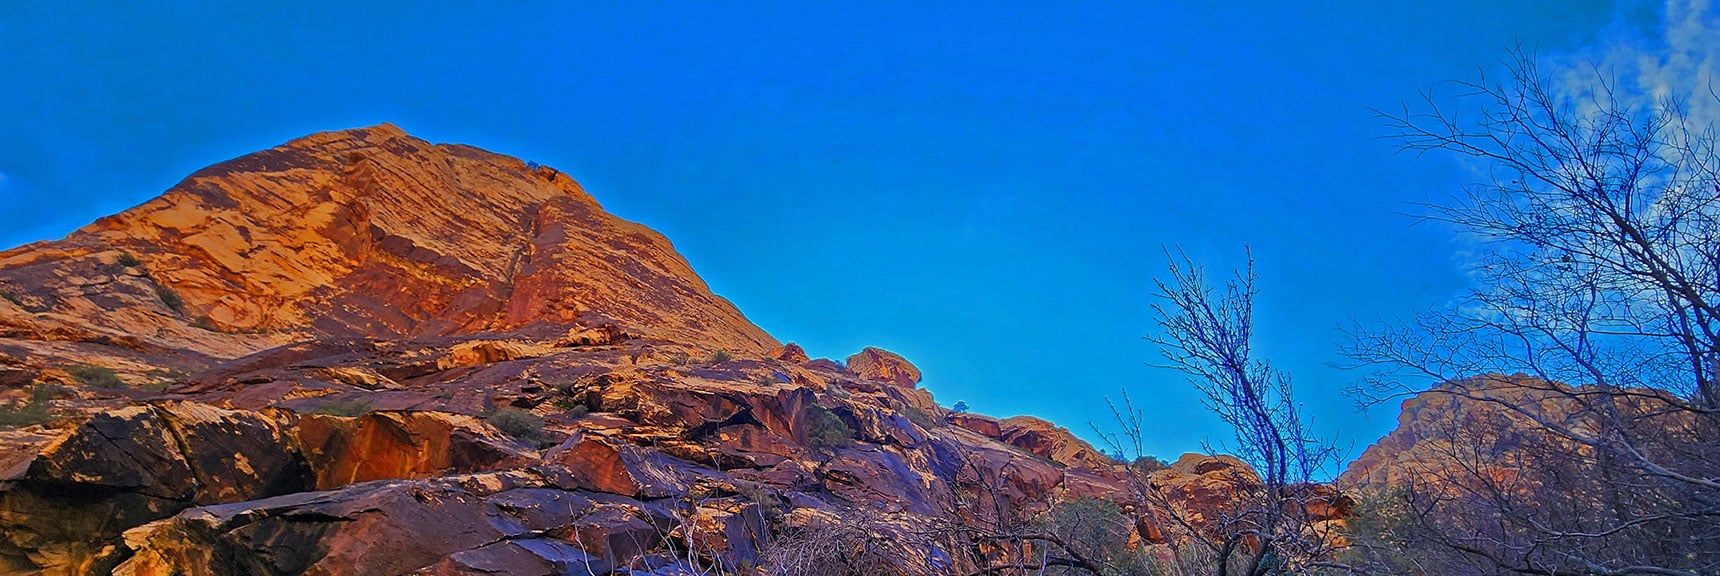 Aztec Red Rock Glows in the Afternoon Sunlight | Oak Creek Canyon North Branch Toward Rainbow Mountains Upper Crest Ridgeline | Rainbow Mountain Wilderness, Nevada